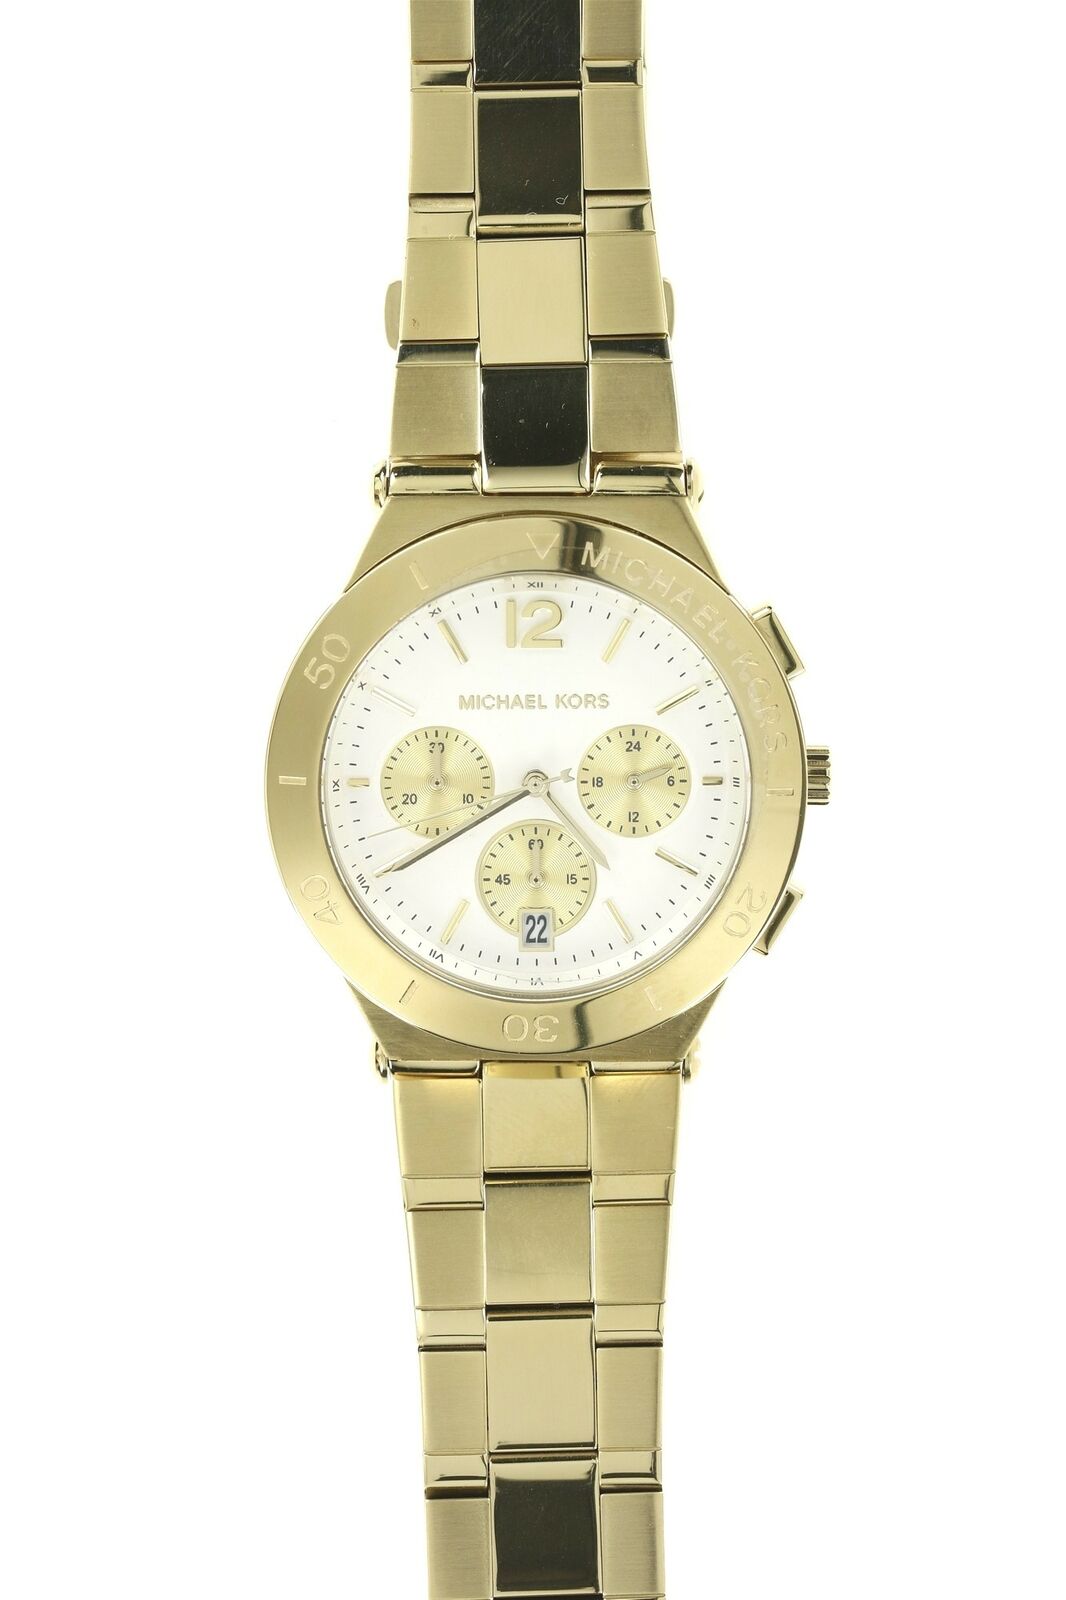 Michael Kors 137996 Women's 'Wyatt' Chrono White Dial Gold Tone Stainless Watch